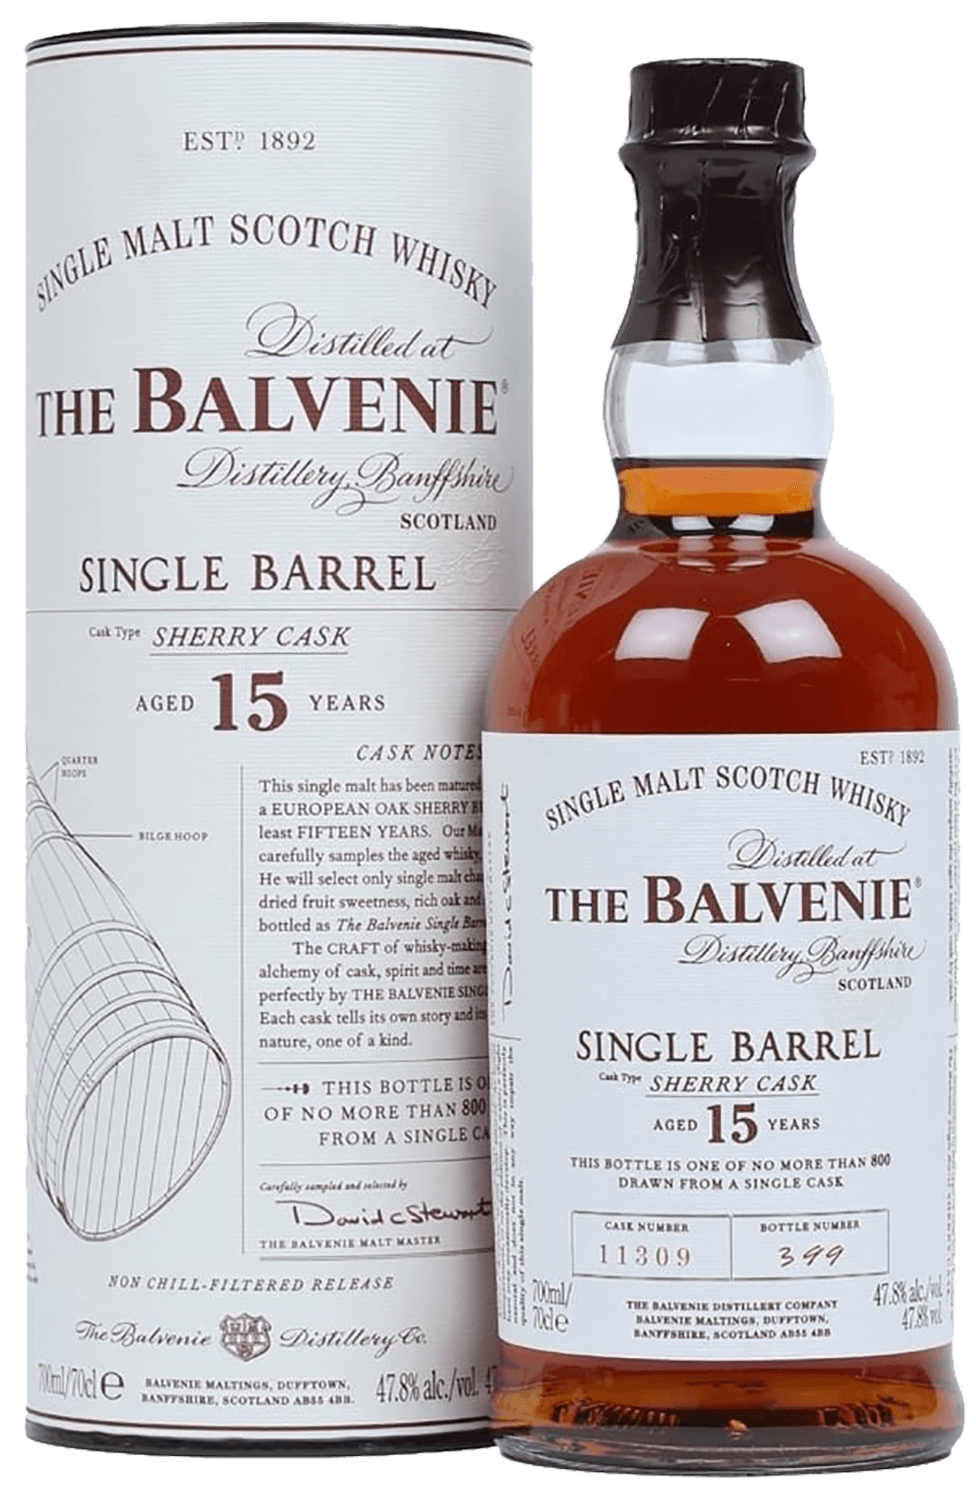 The Balvenie Single Barrel Sherry Cask 15 Years Old Single Malt Scotch Whisky (gift box) the balvenie peat week 14 y o single malt scotch whisky gift box